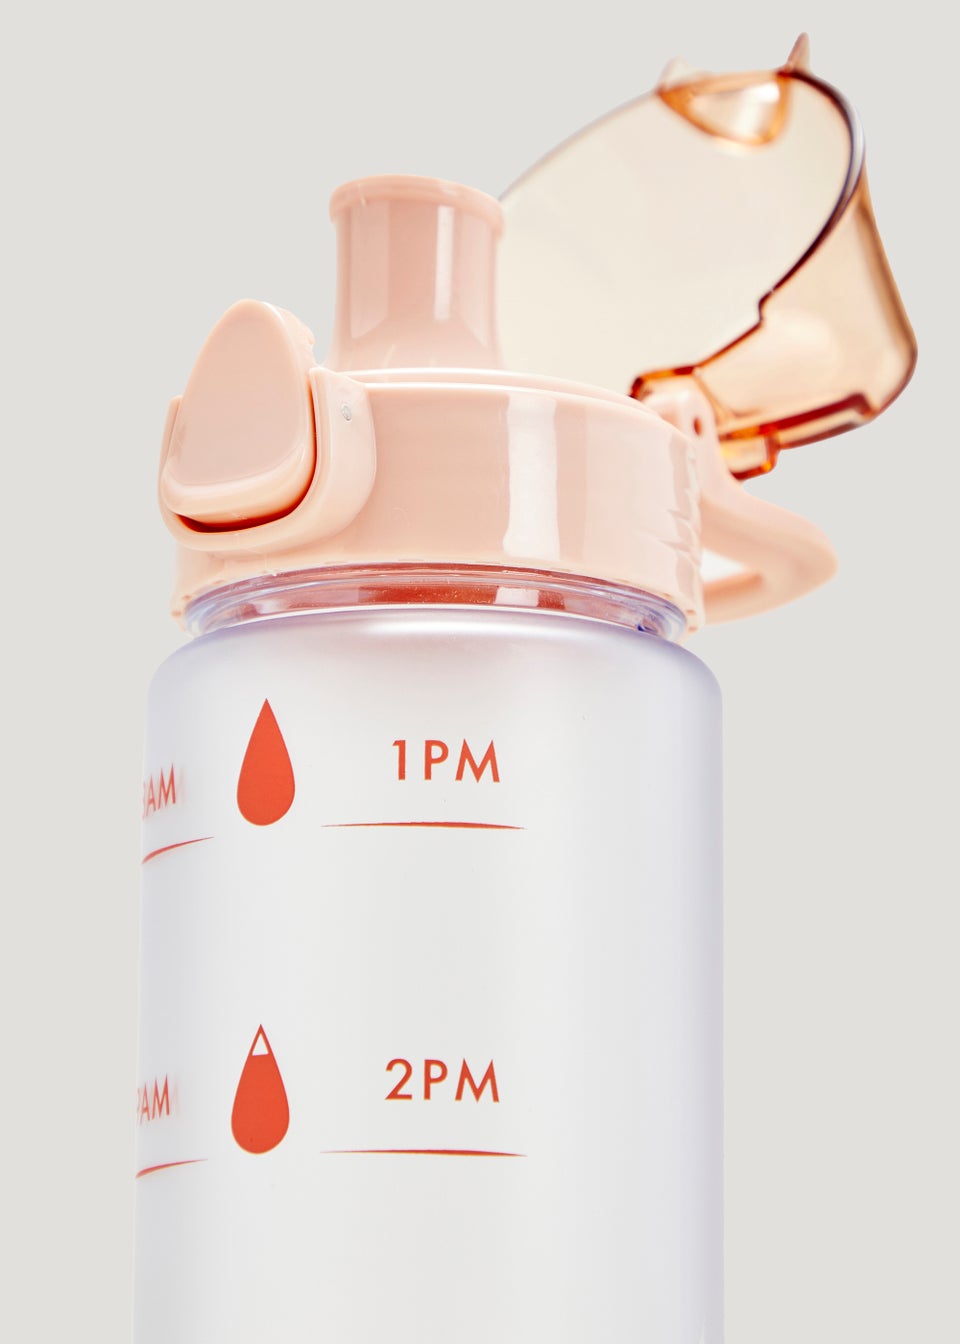 Kichna Pink Ombre Tracker Reusable Water Bottle (700ml)